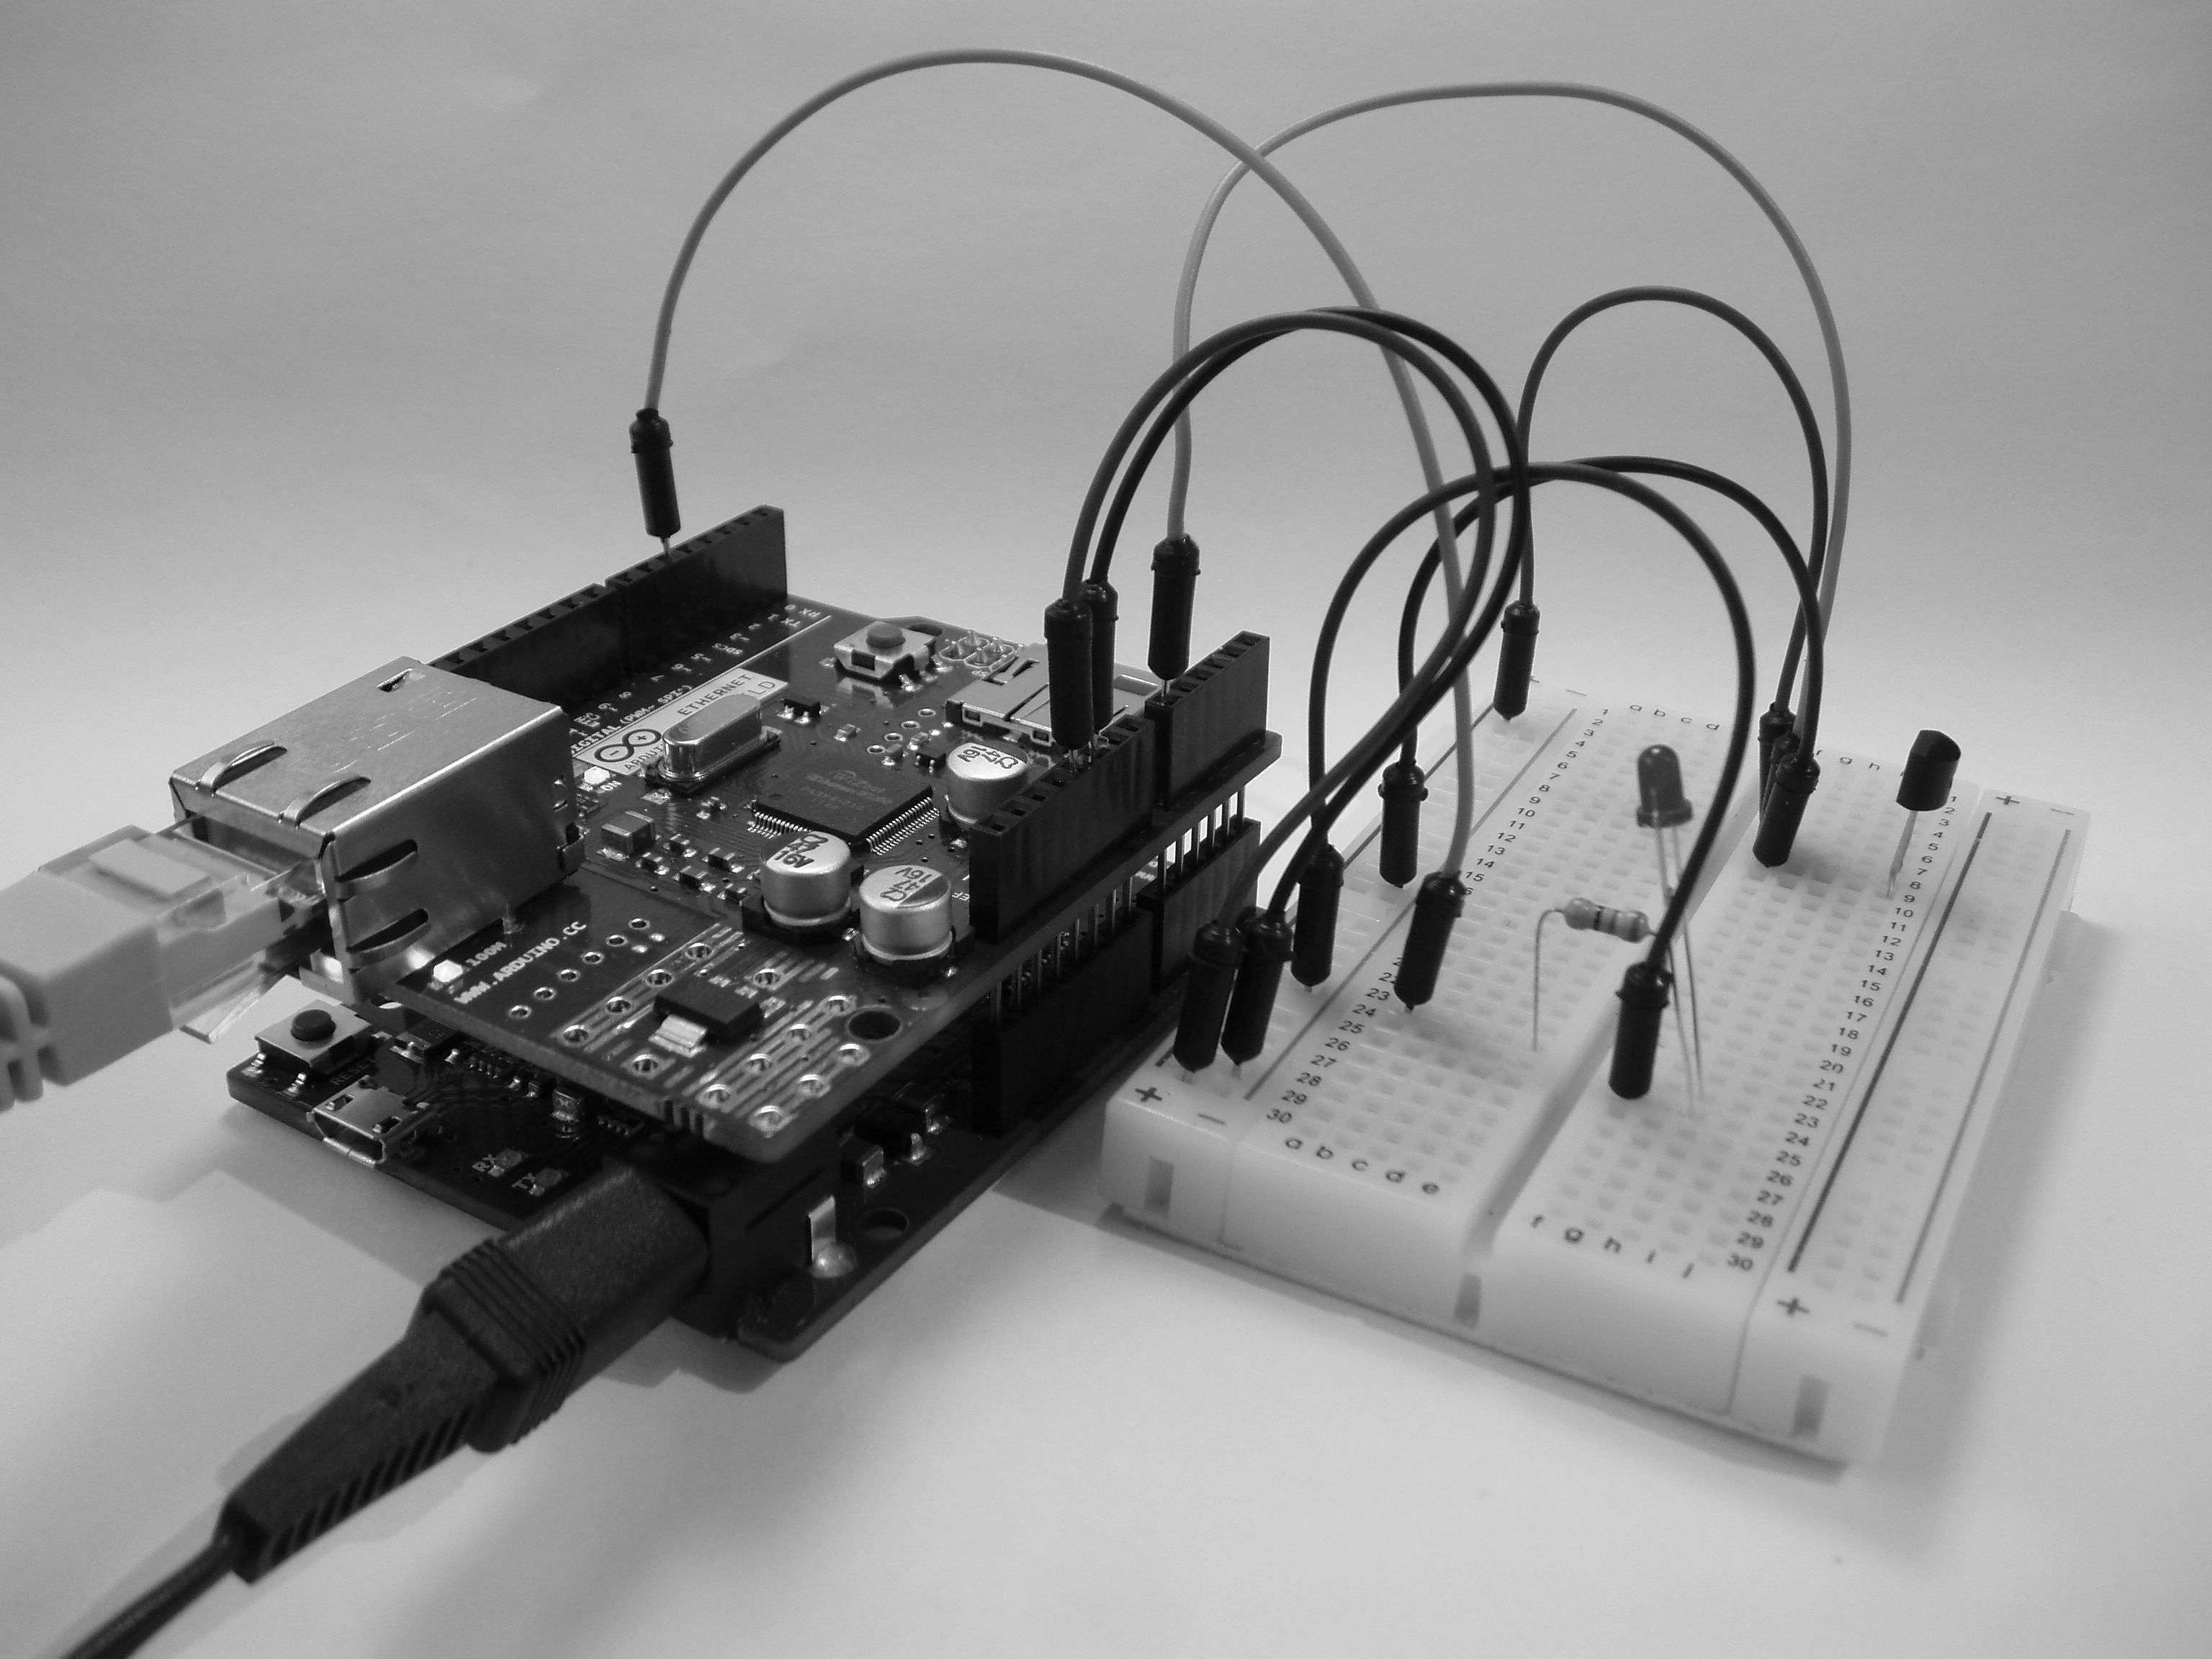 Arduino with temperature sensor in action